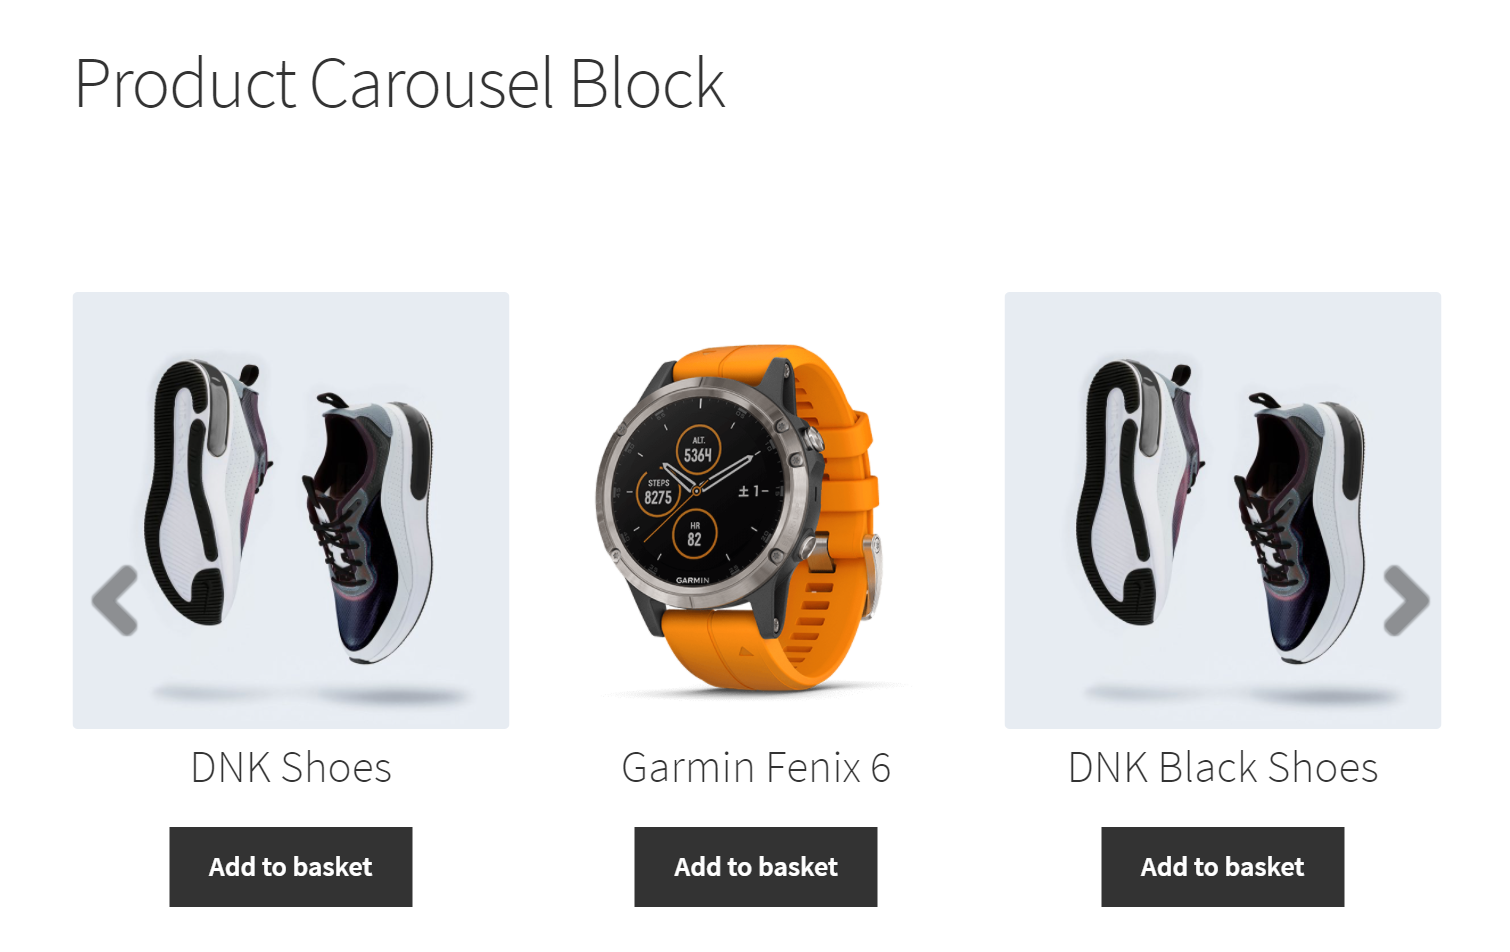 Product Carousel Block